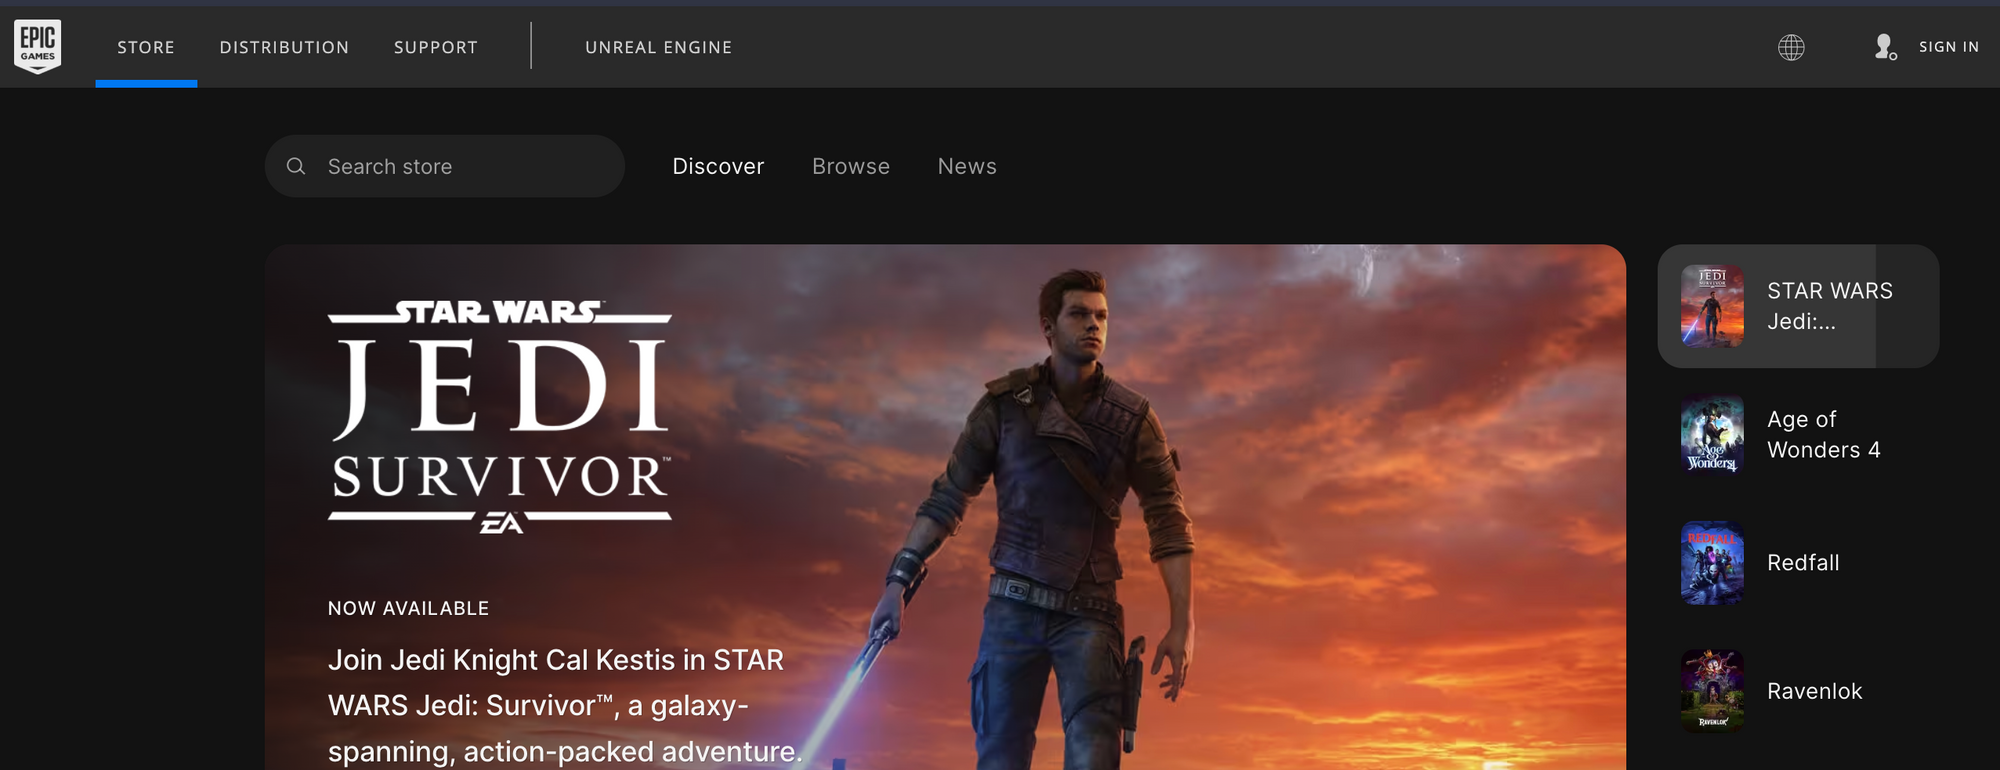 Website of Epic Games